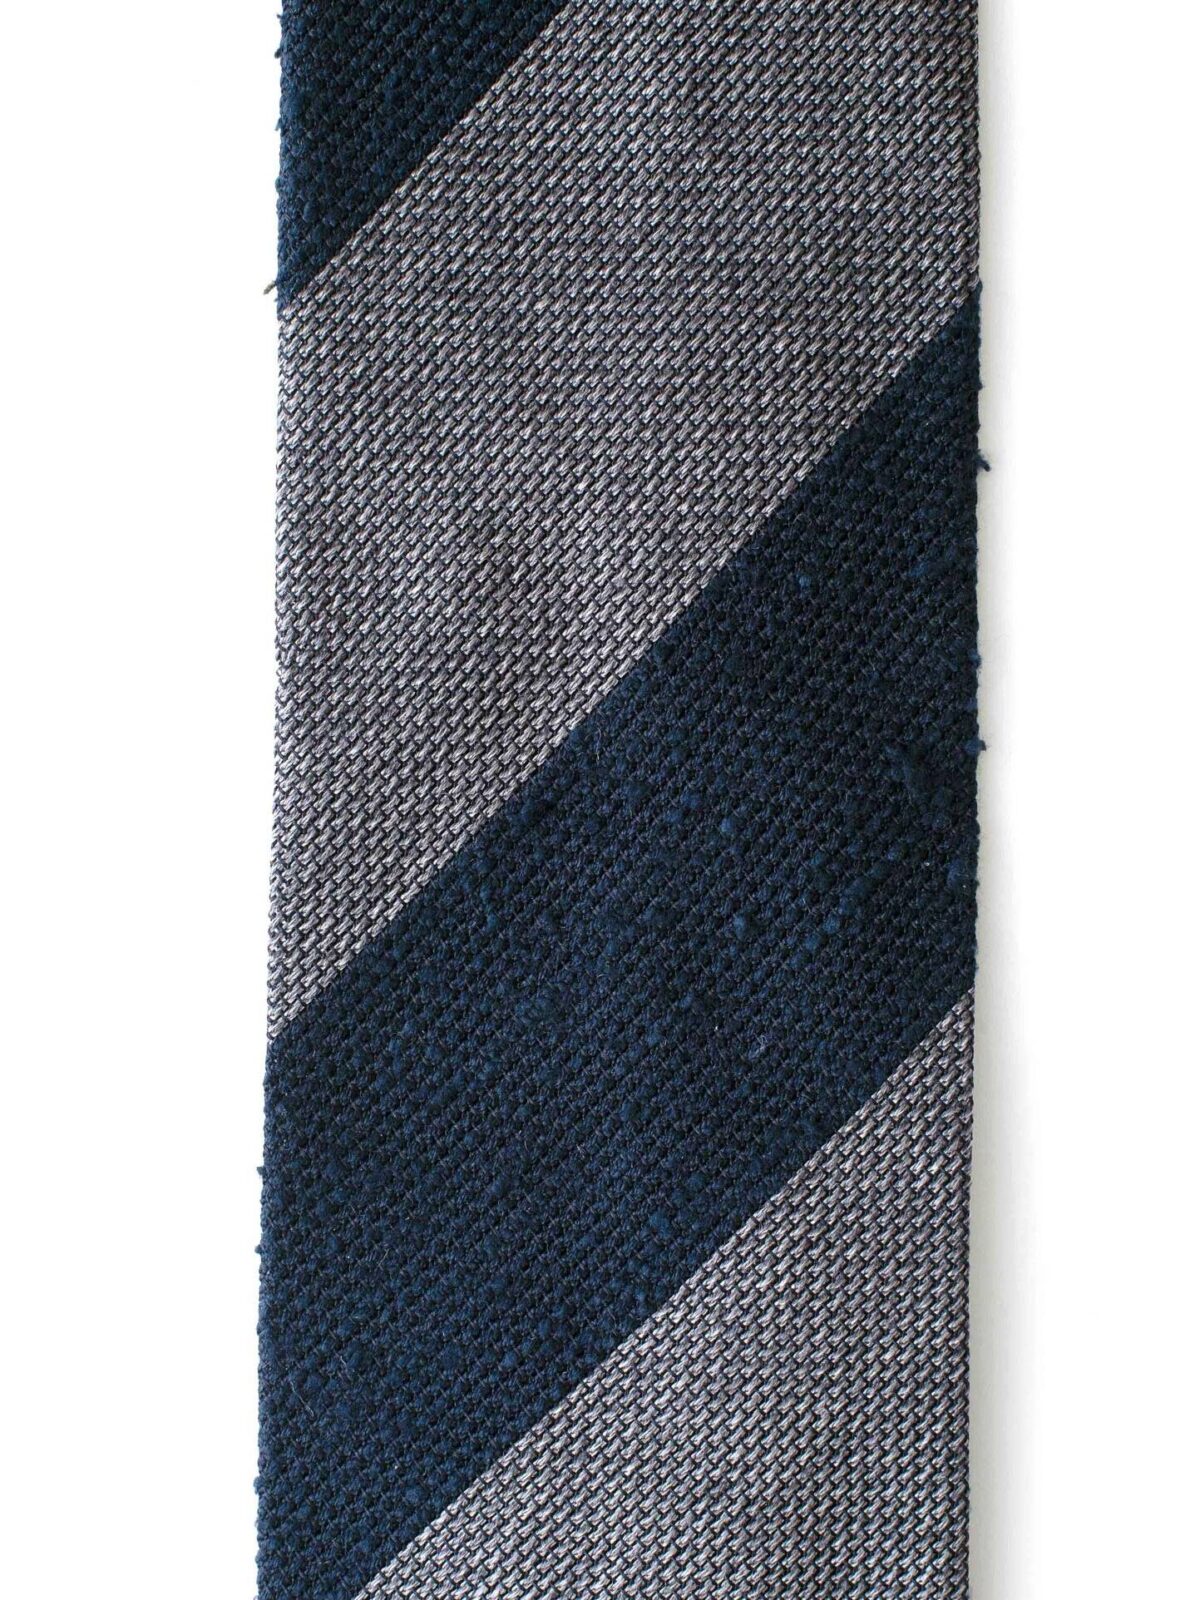 Navy and Grey Striped Shantung Grenadine Tie